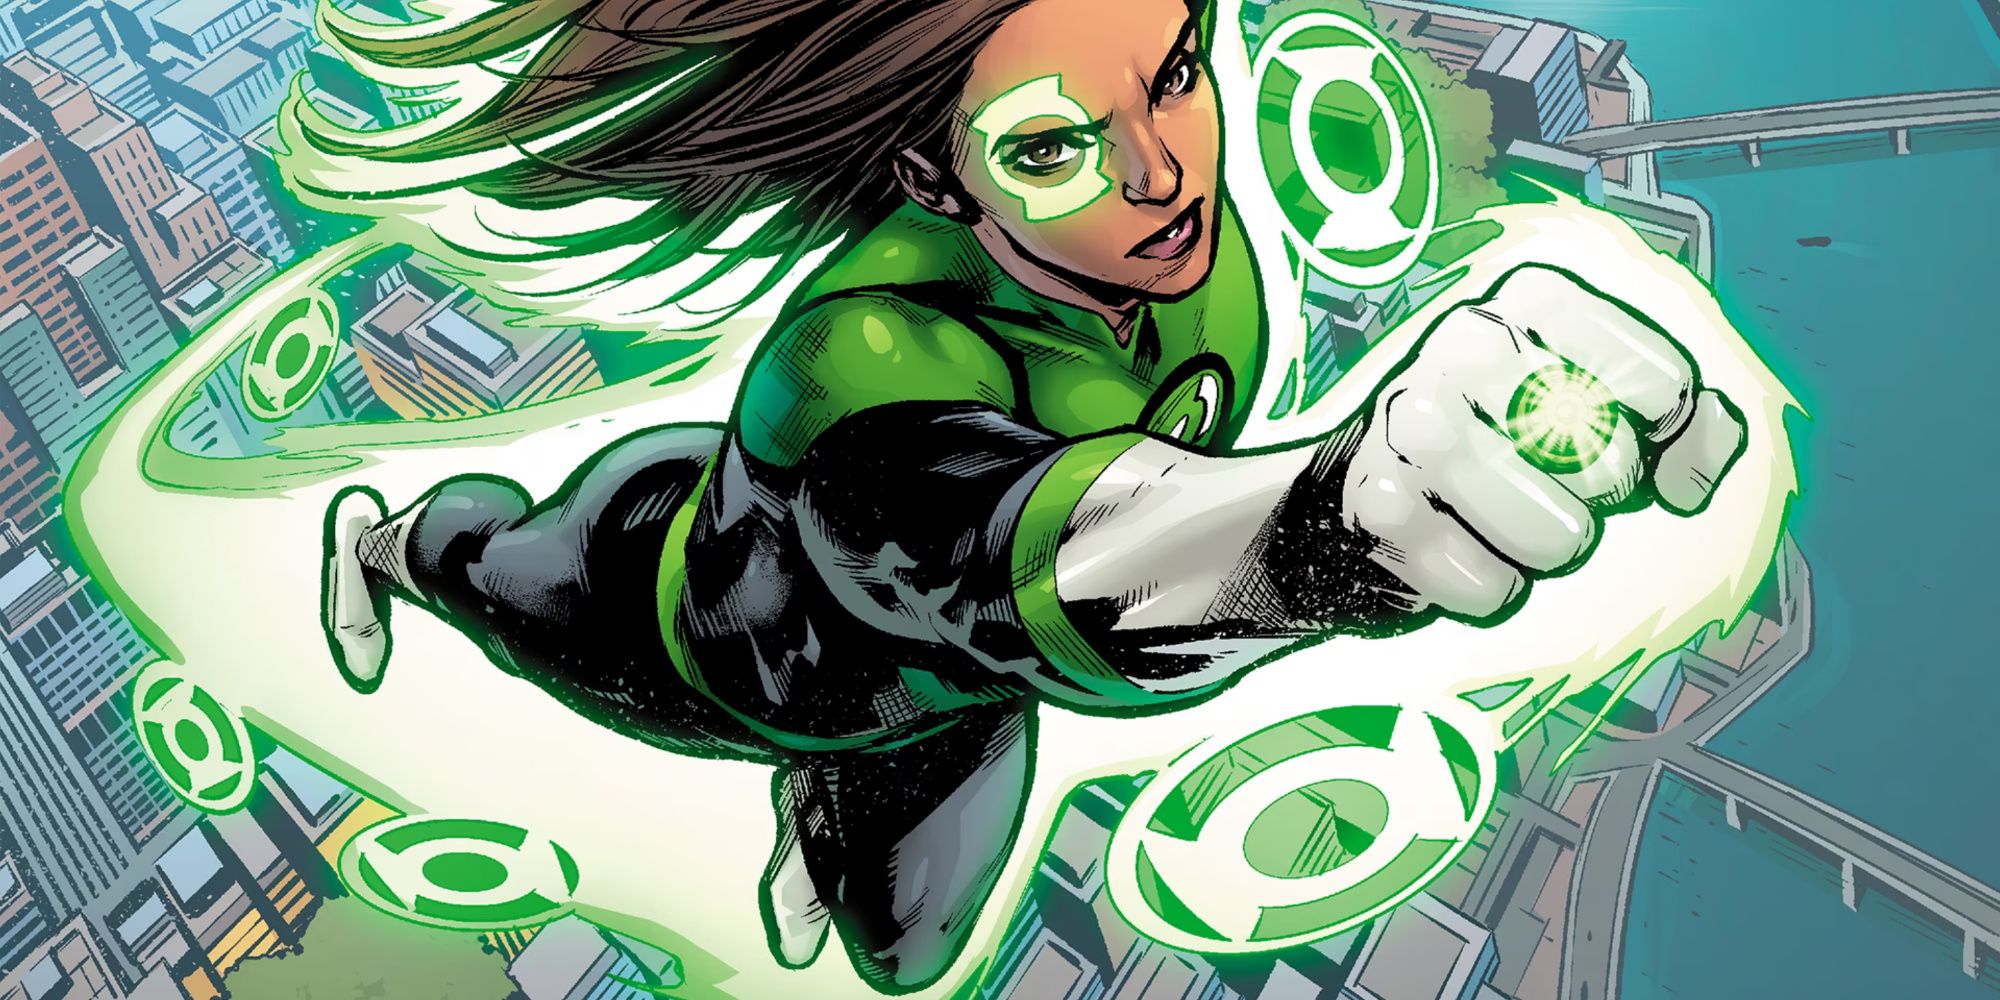 Green Lantern (Jessica Cruz) from the comics